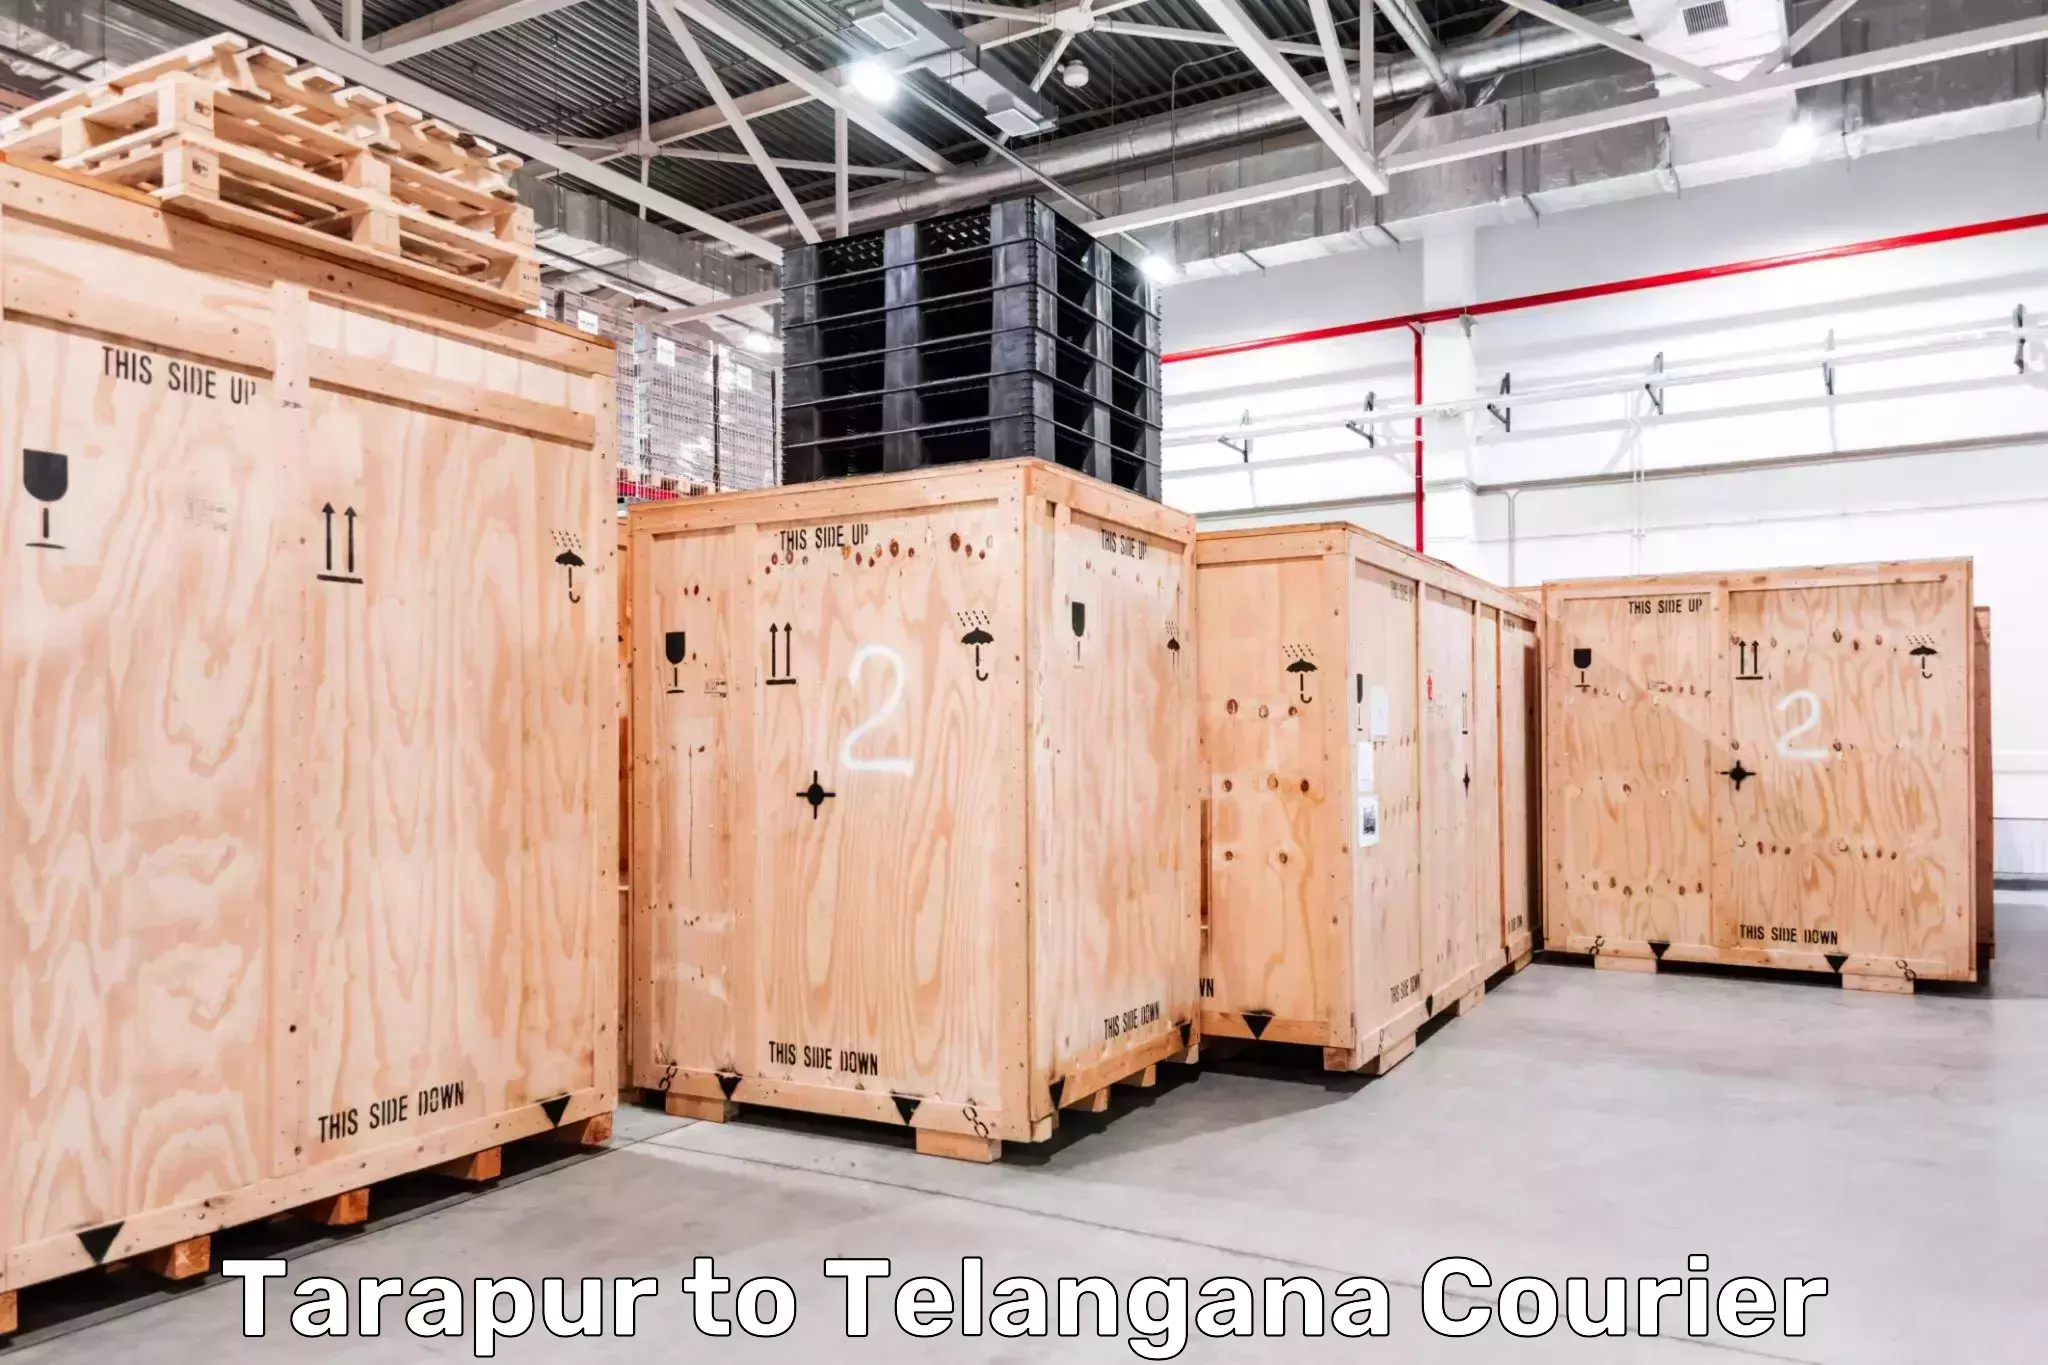 Express courier facilities Tarapur to Pregnapur